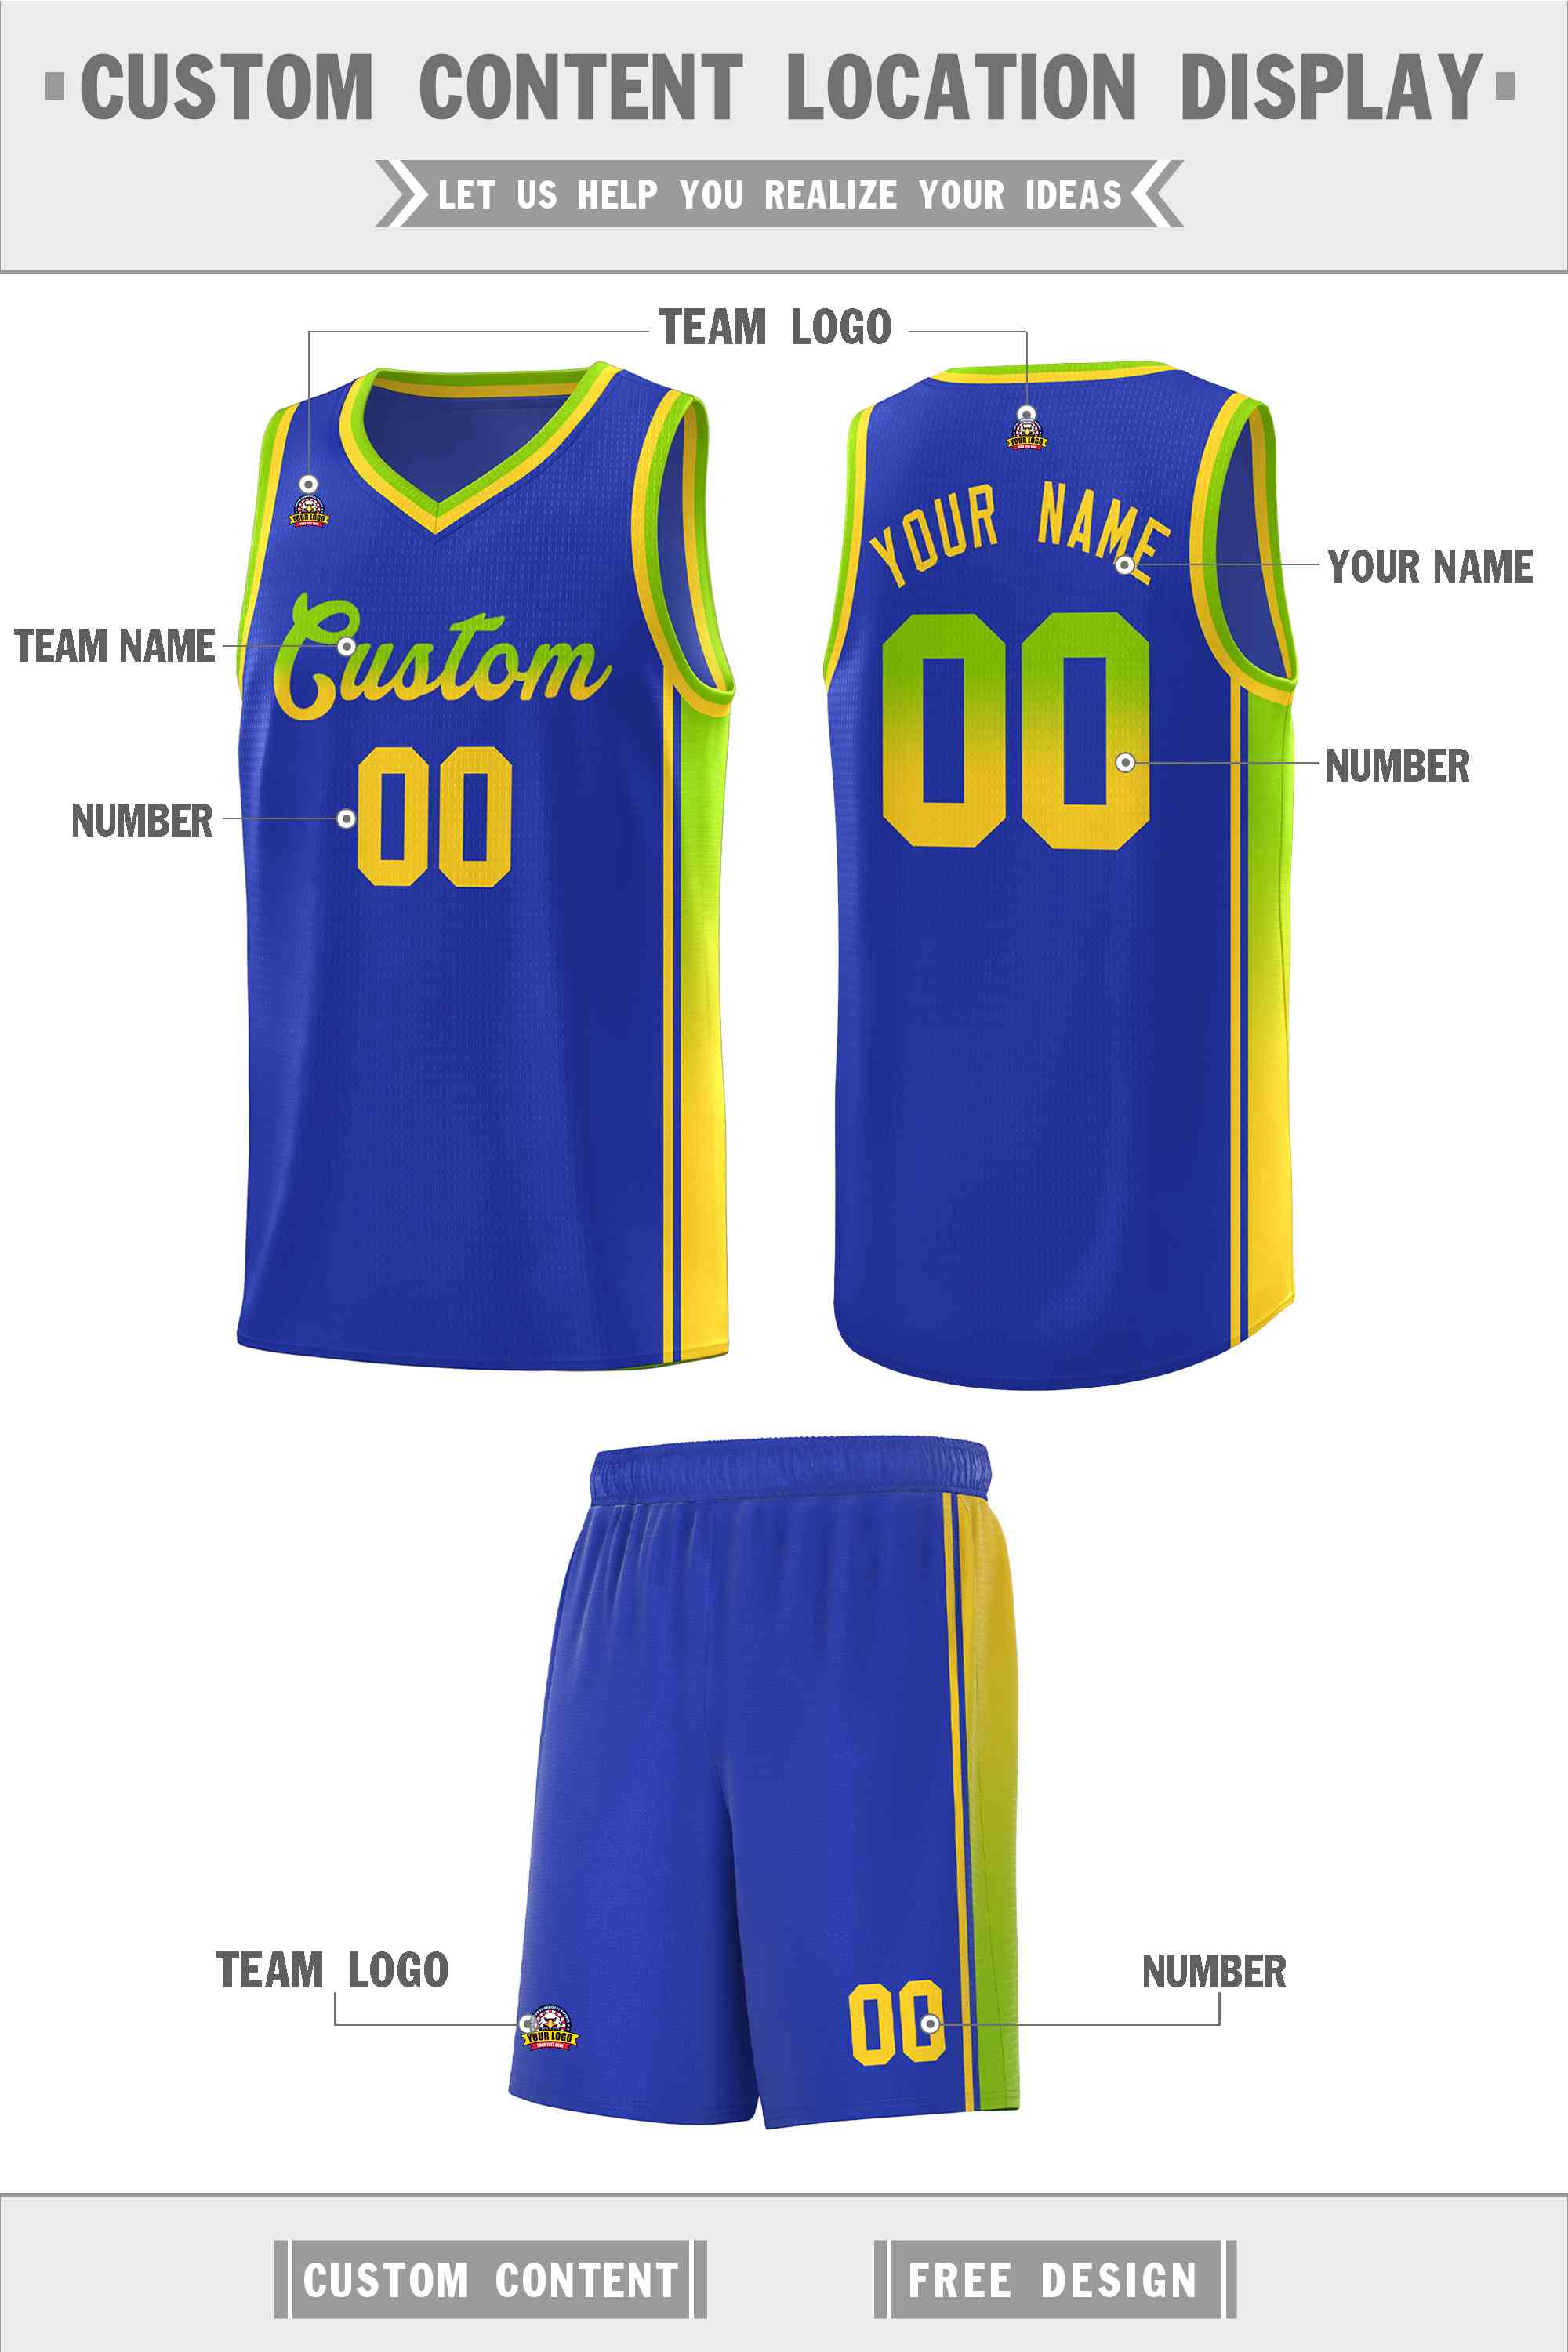 Custom Royal Neon Green-Gold Gradient Fashion Sports Uniform Basketball Jersey